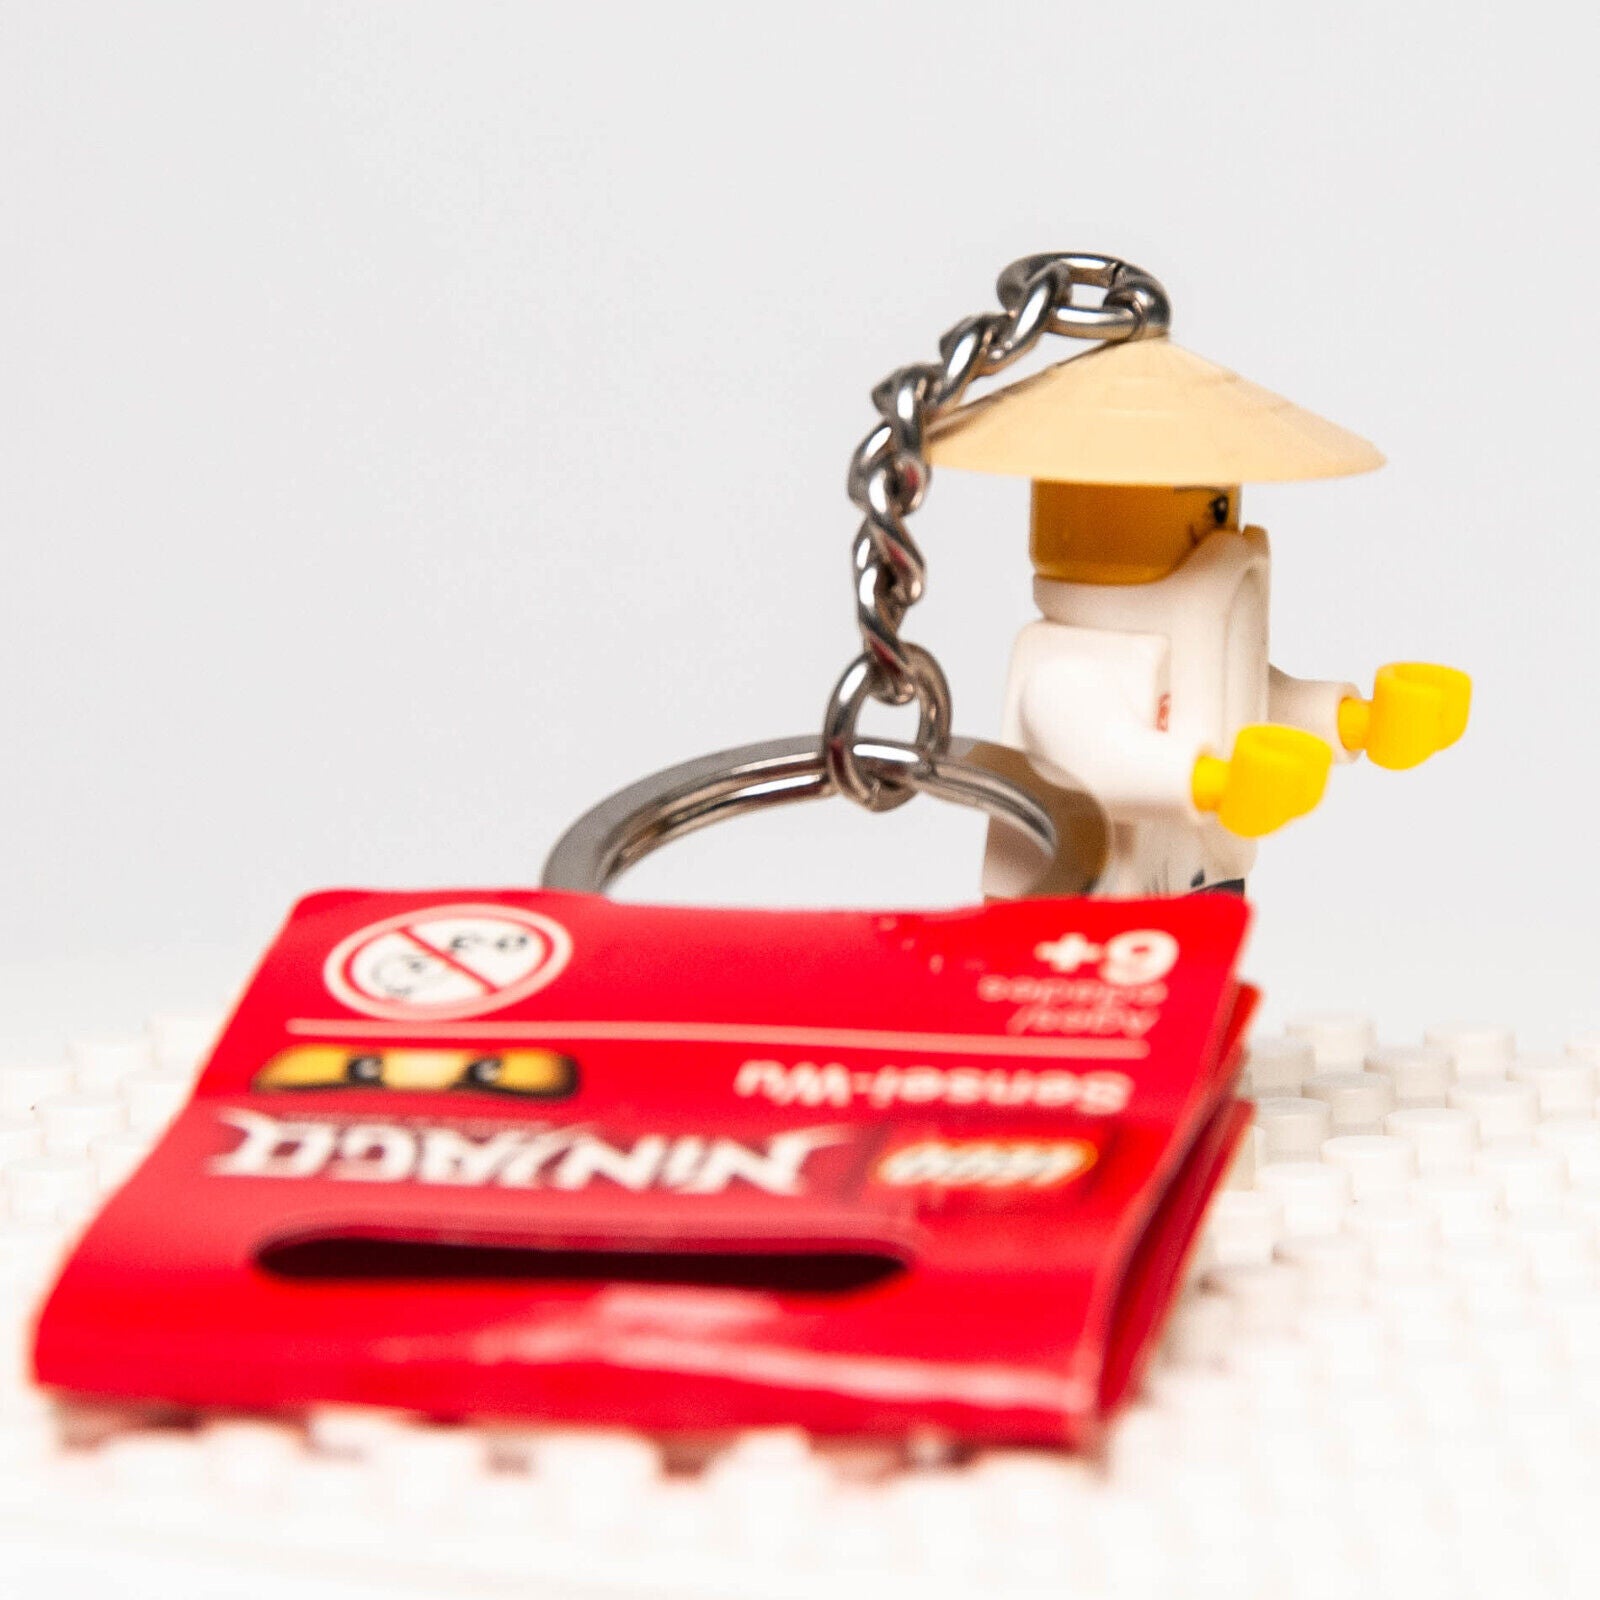 NEW Lego Ninjago Sensei Wu Minifigure Keychain 853101